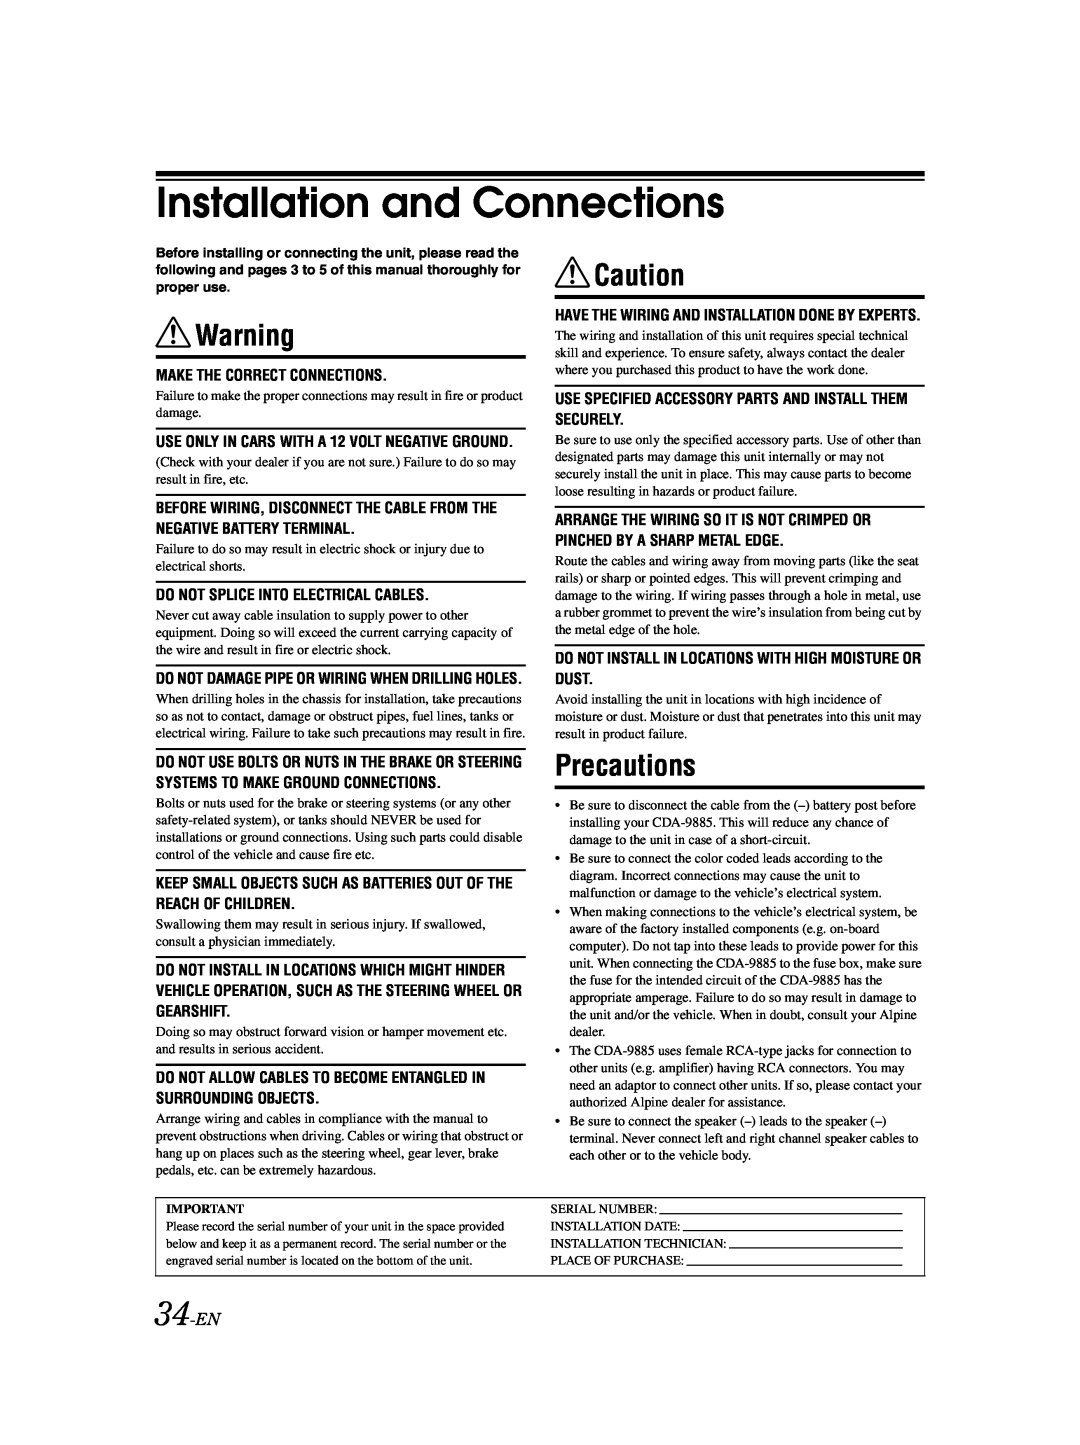 Alpine CDA-9885 owner manual Installation and Connections, Precautions, 34-EN 